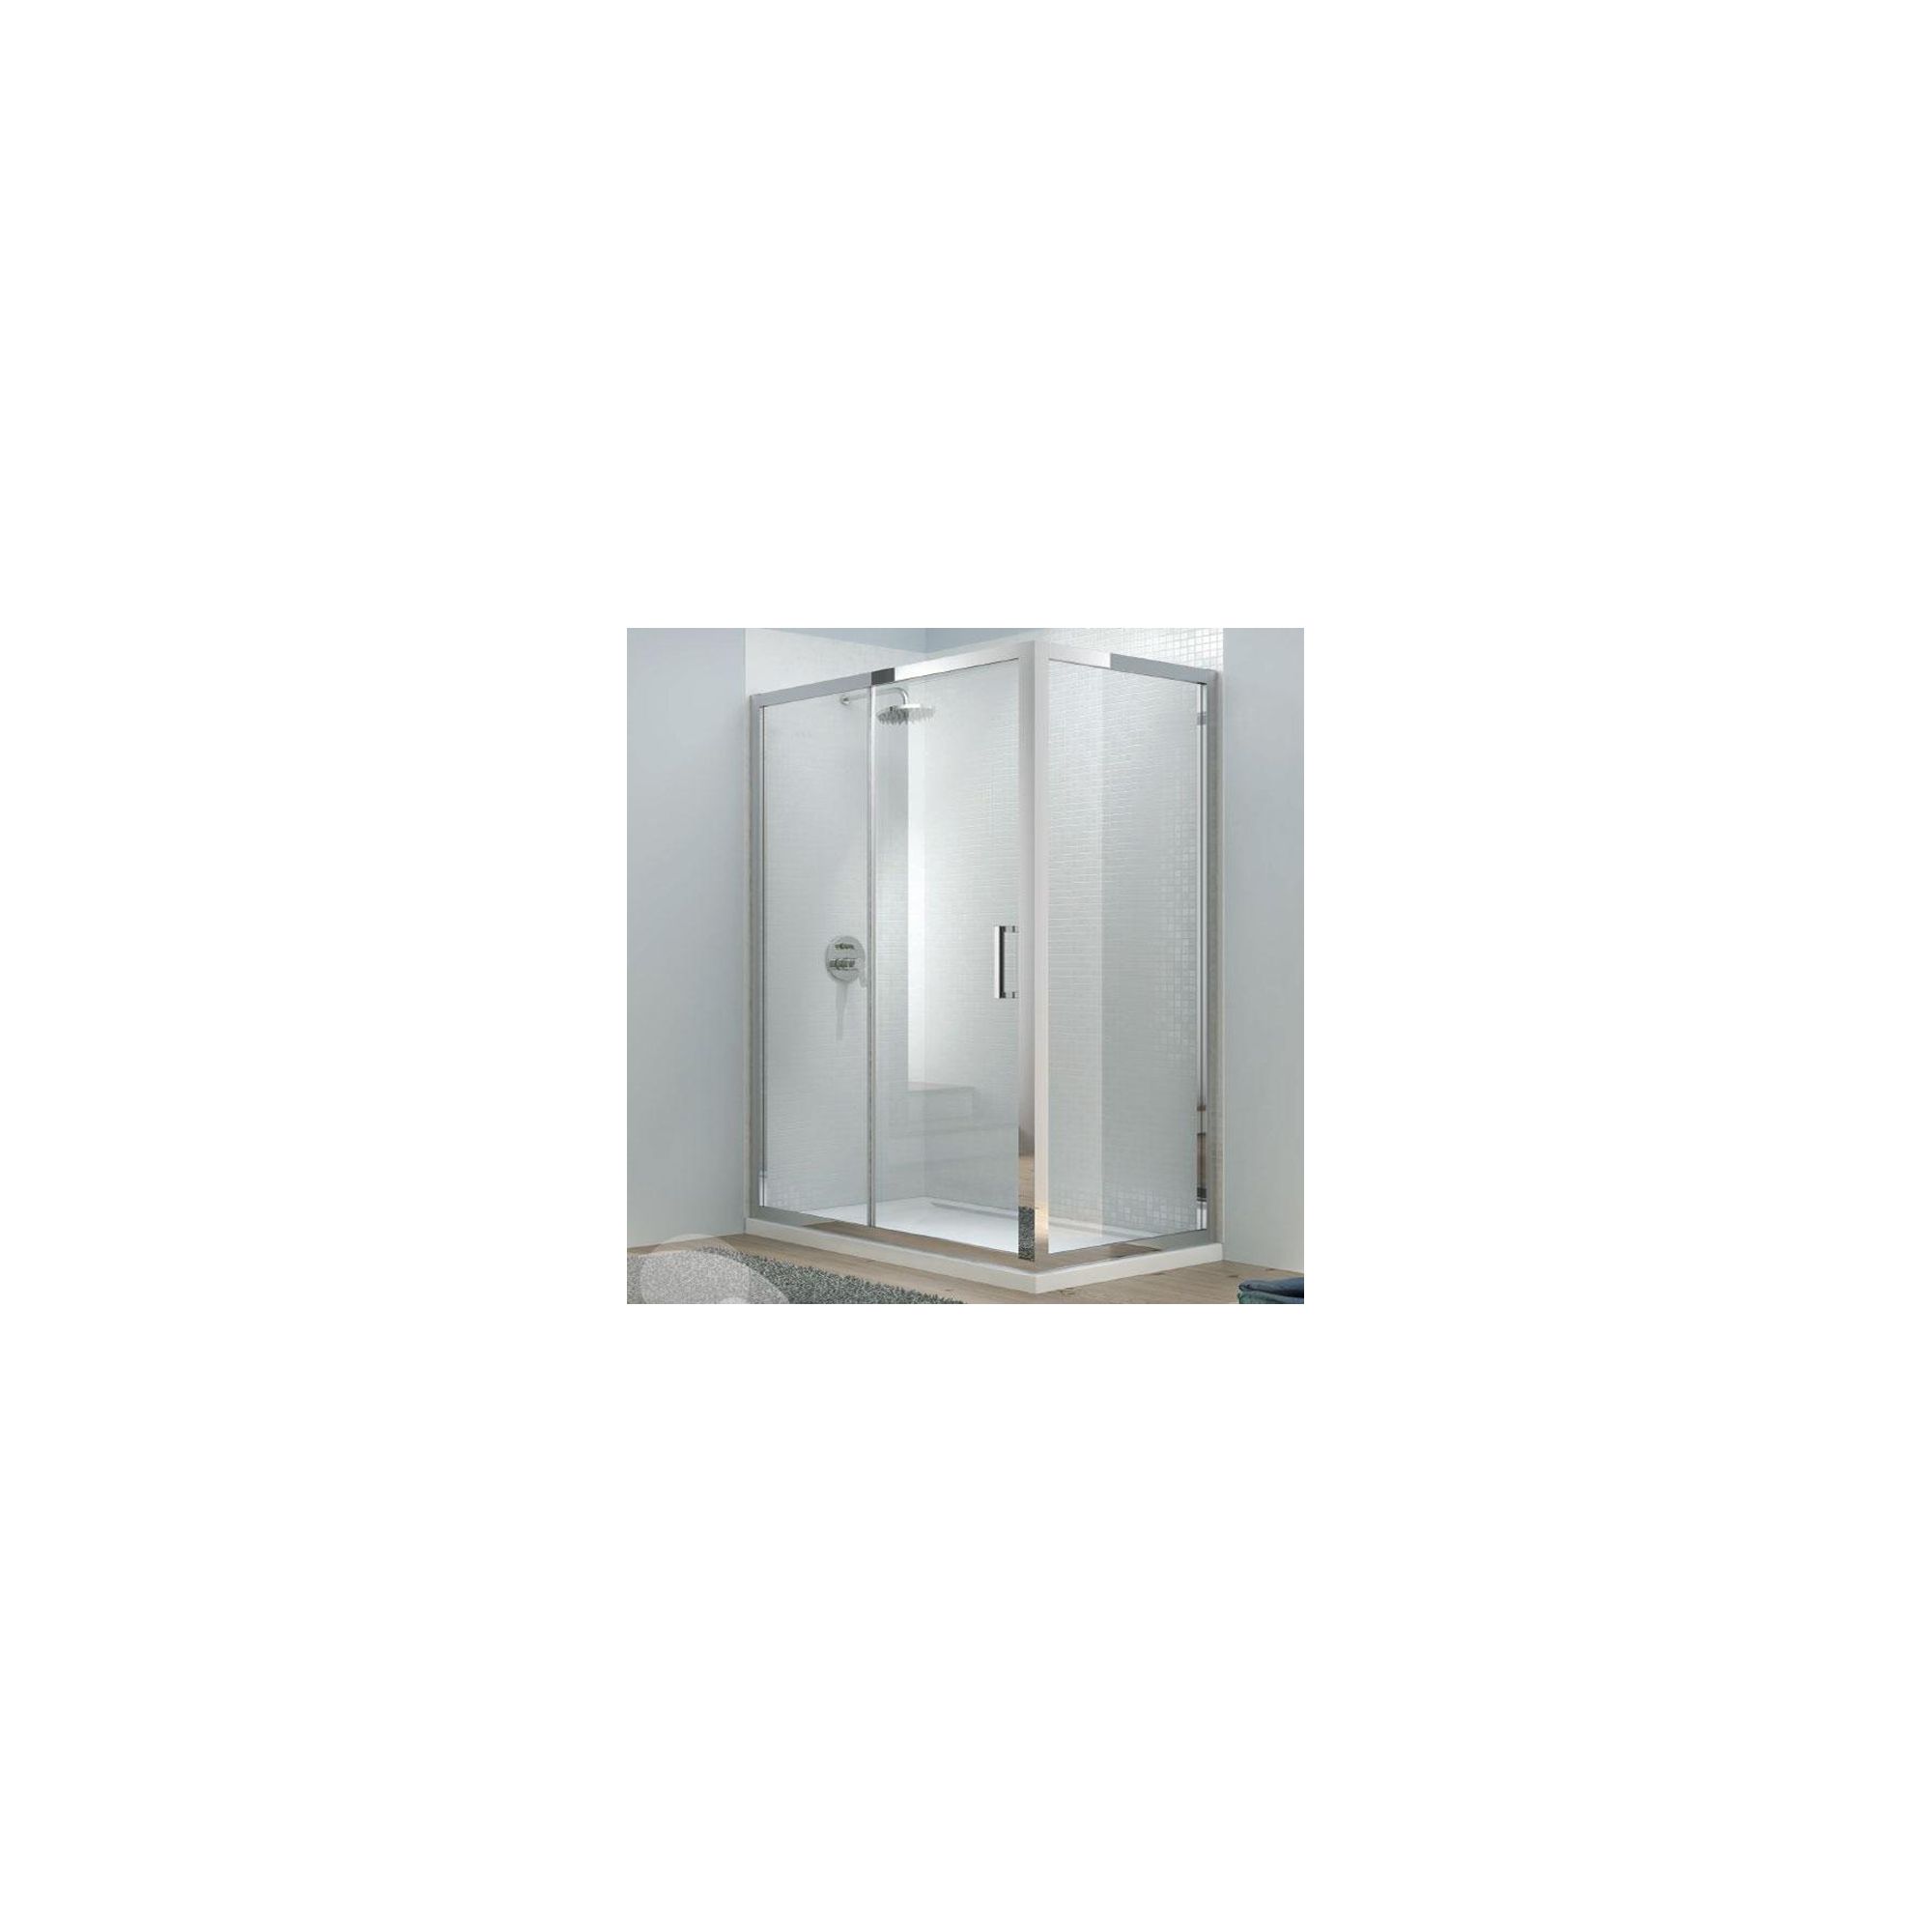 Merlyn Vivid Eight Sliding Shower Door, 1100mm Wide, 8mm Glass at Tesco Direct